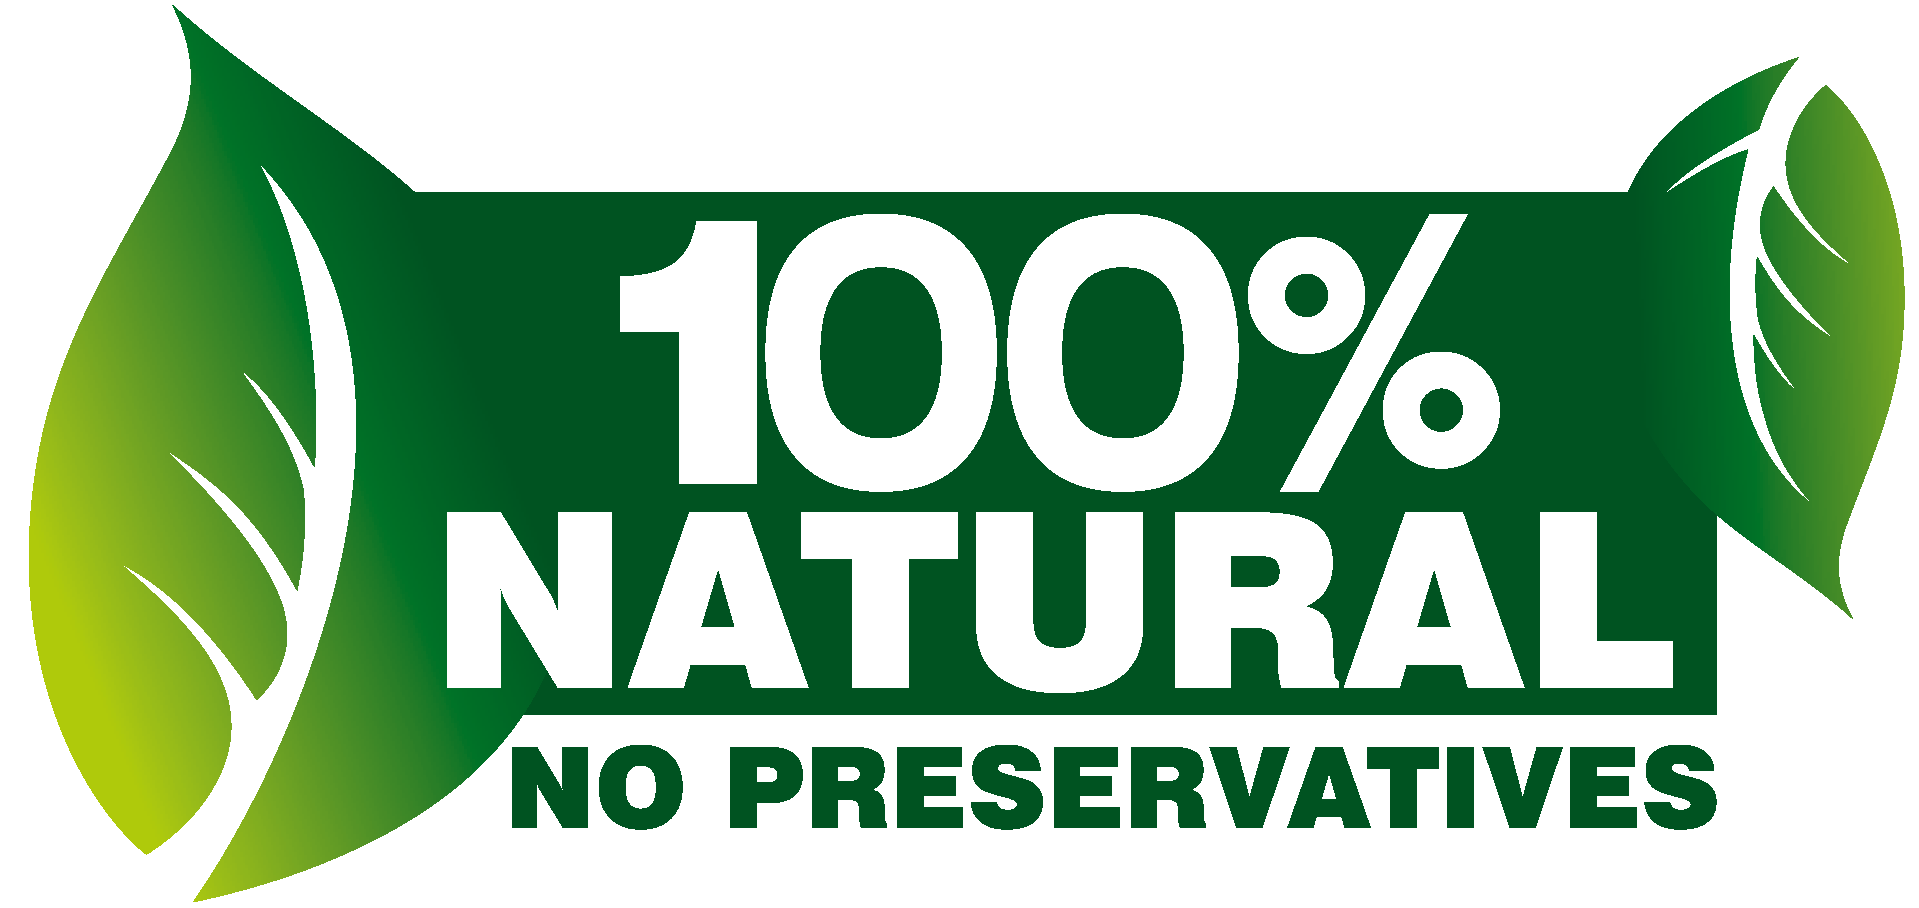 Natural production. Лого natural product 100% Organic. 100 Натуральный. Натуральный продукт. Лого 100 натуральный.